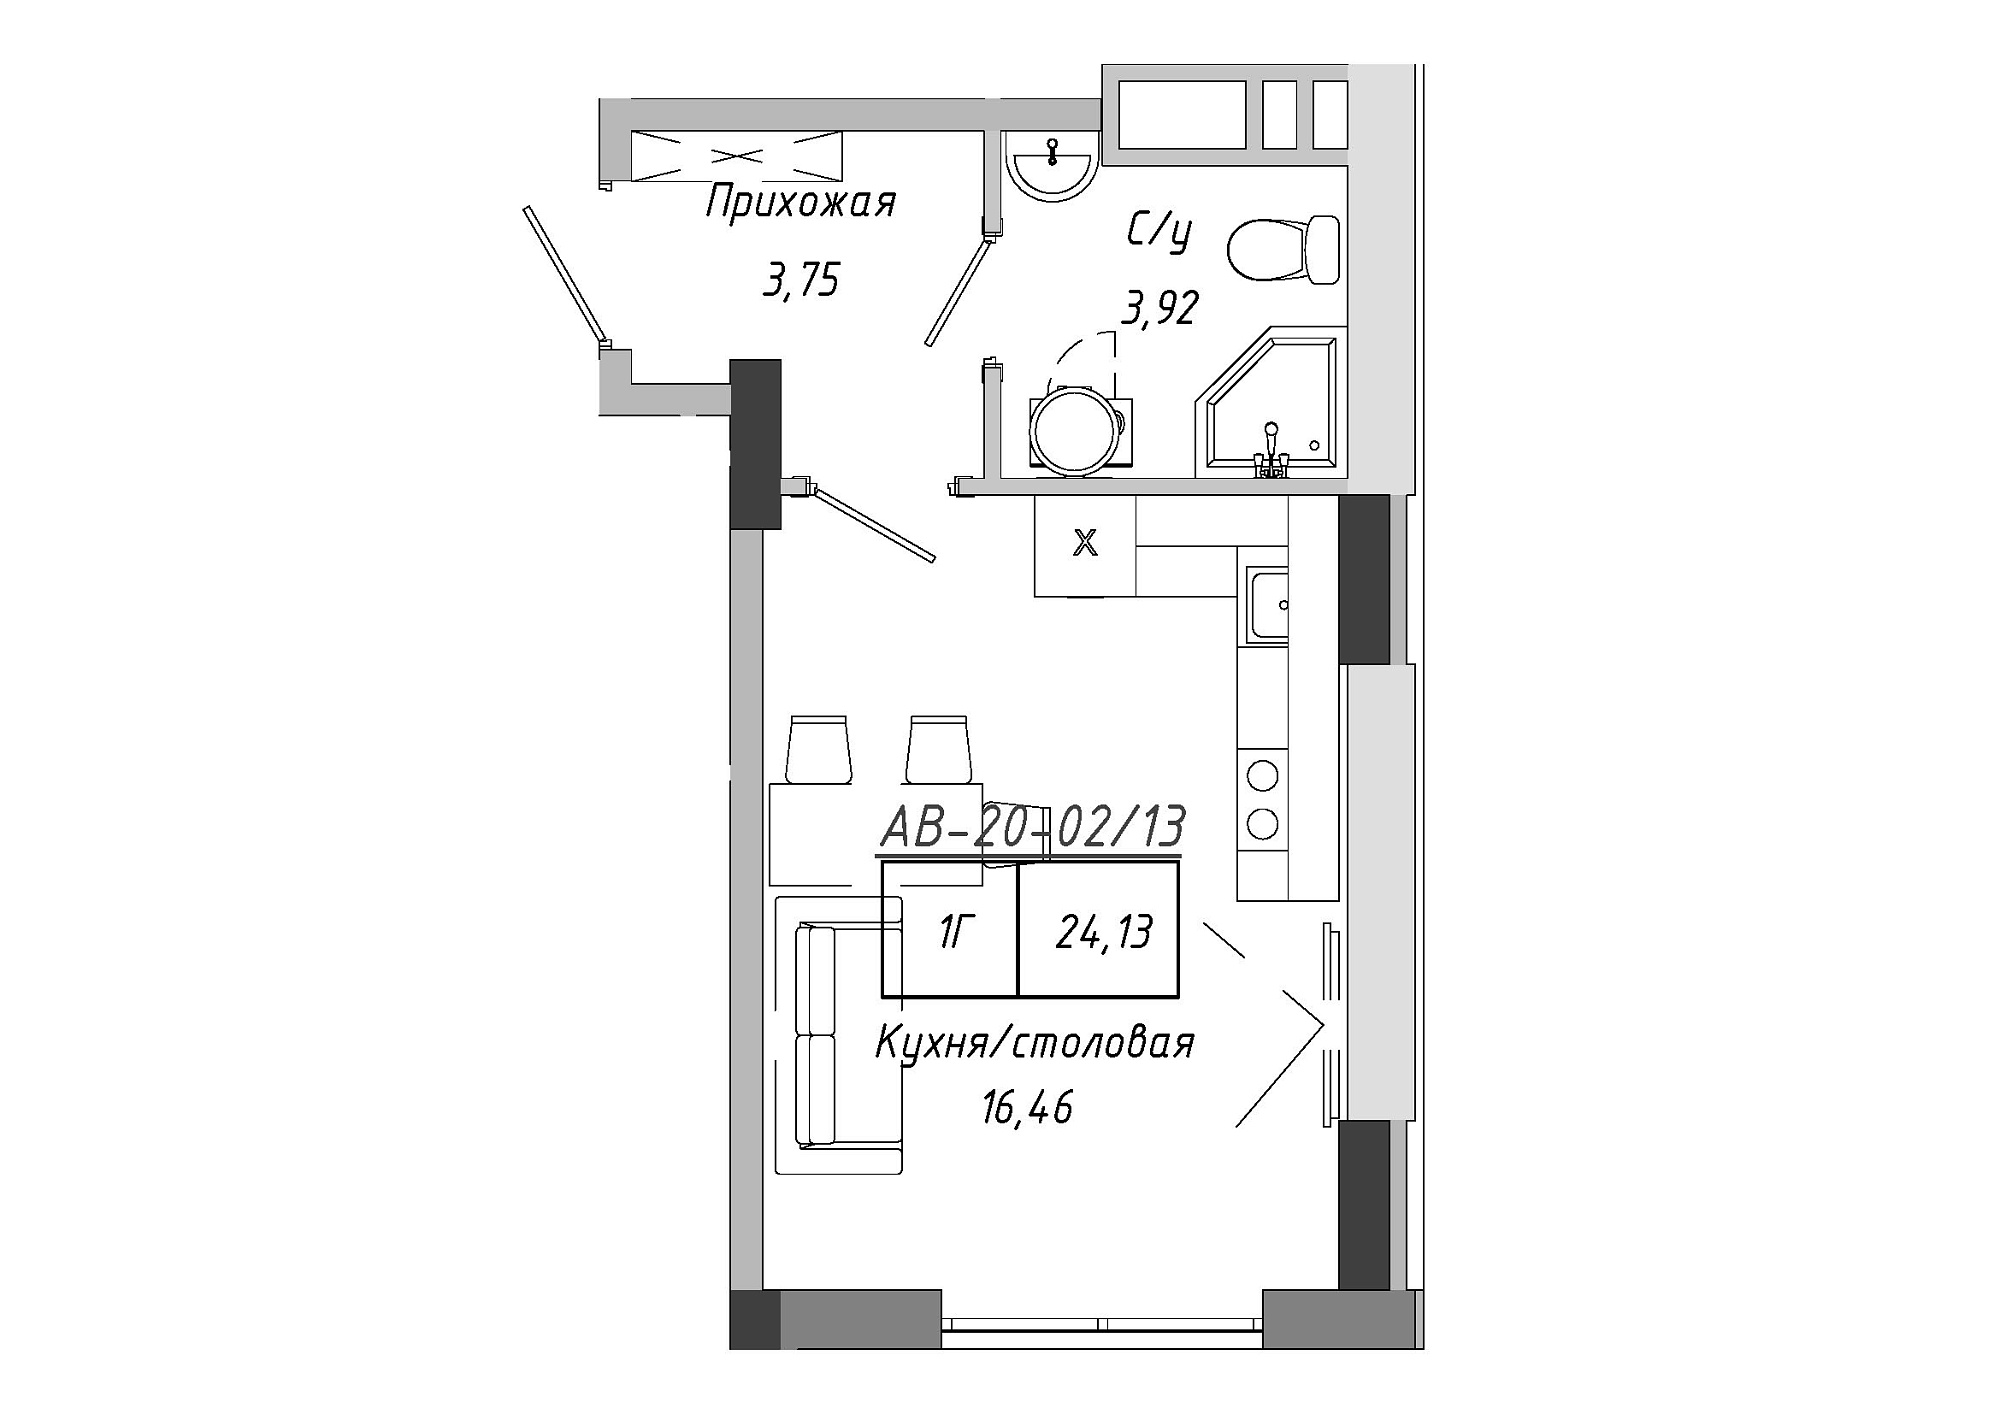 Planning Smart flats area 23.4m2, AB-20-02/00013.